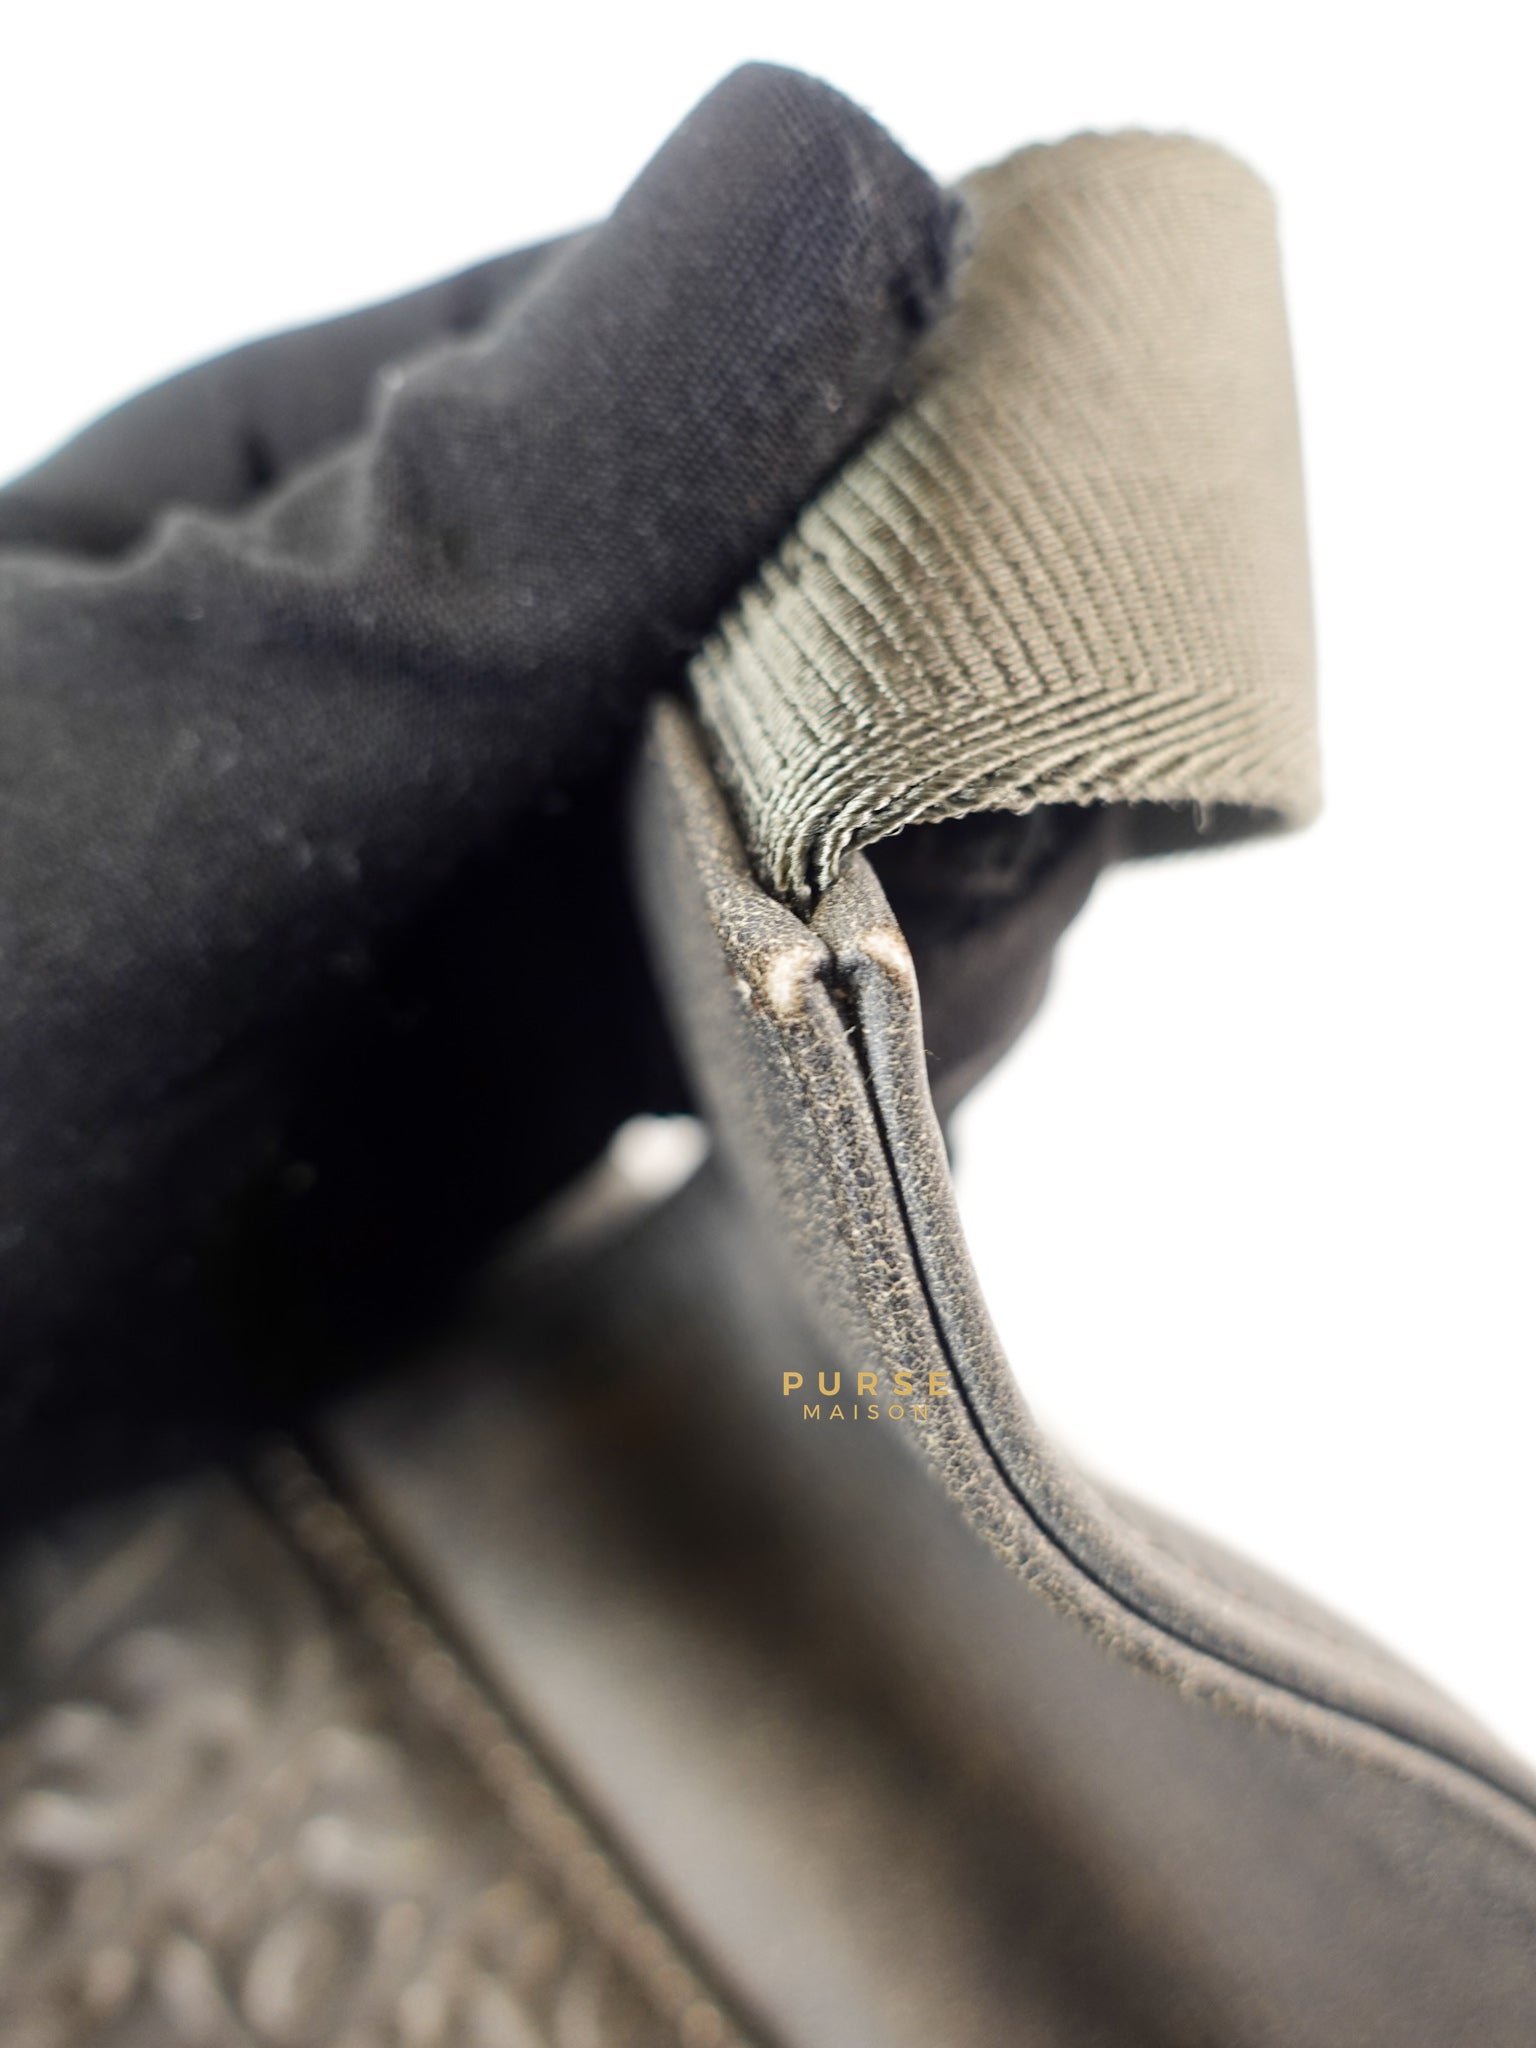 Saddle Homme Grunge in Dark Grey Oblique Body Bag for Men | Purse Maison Luxury Bags Shop